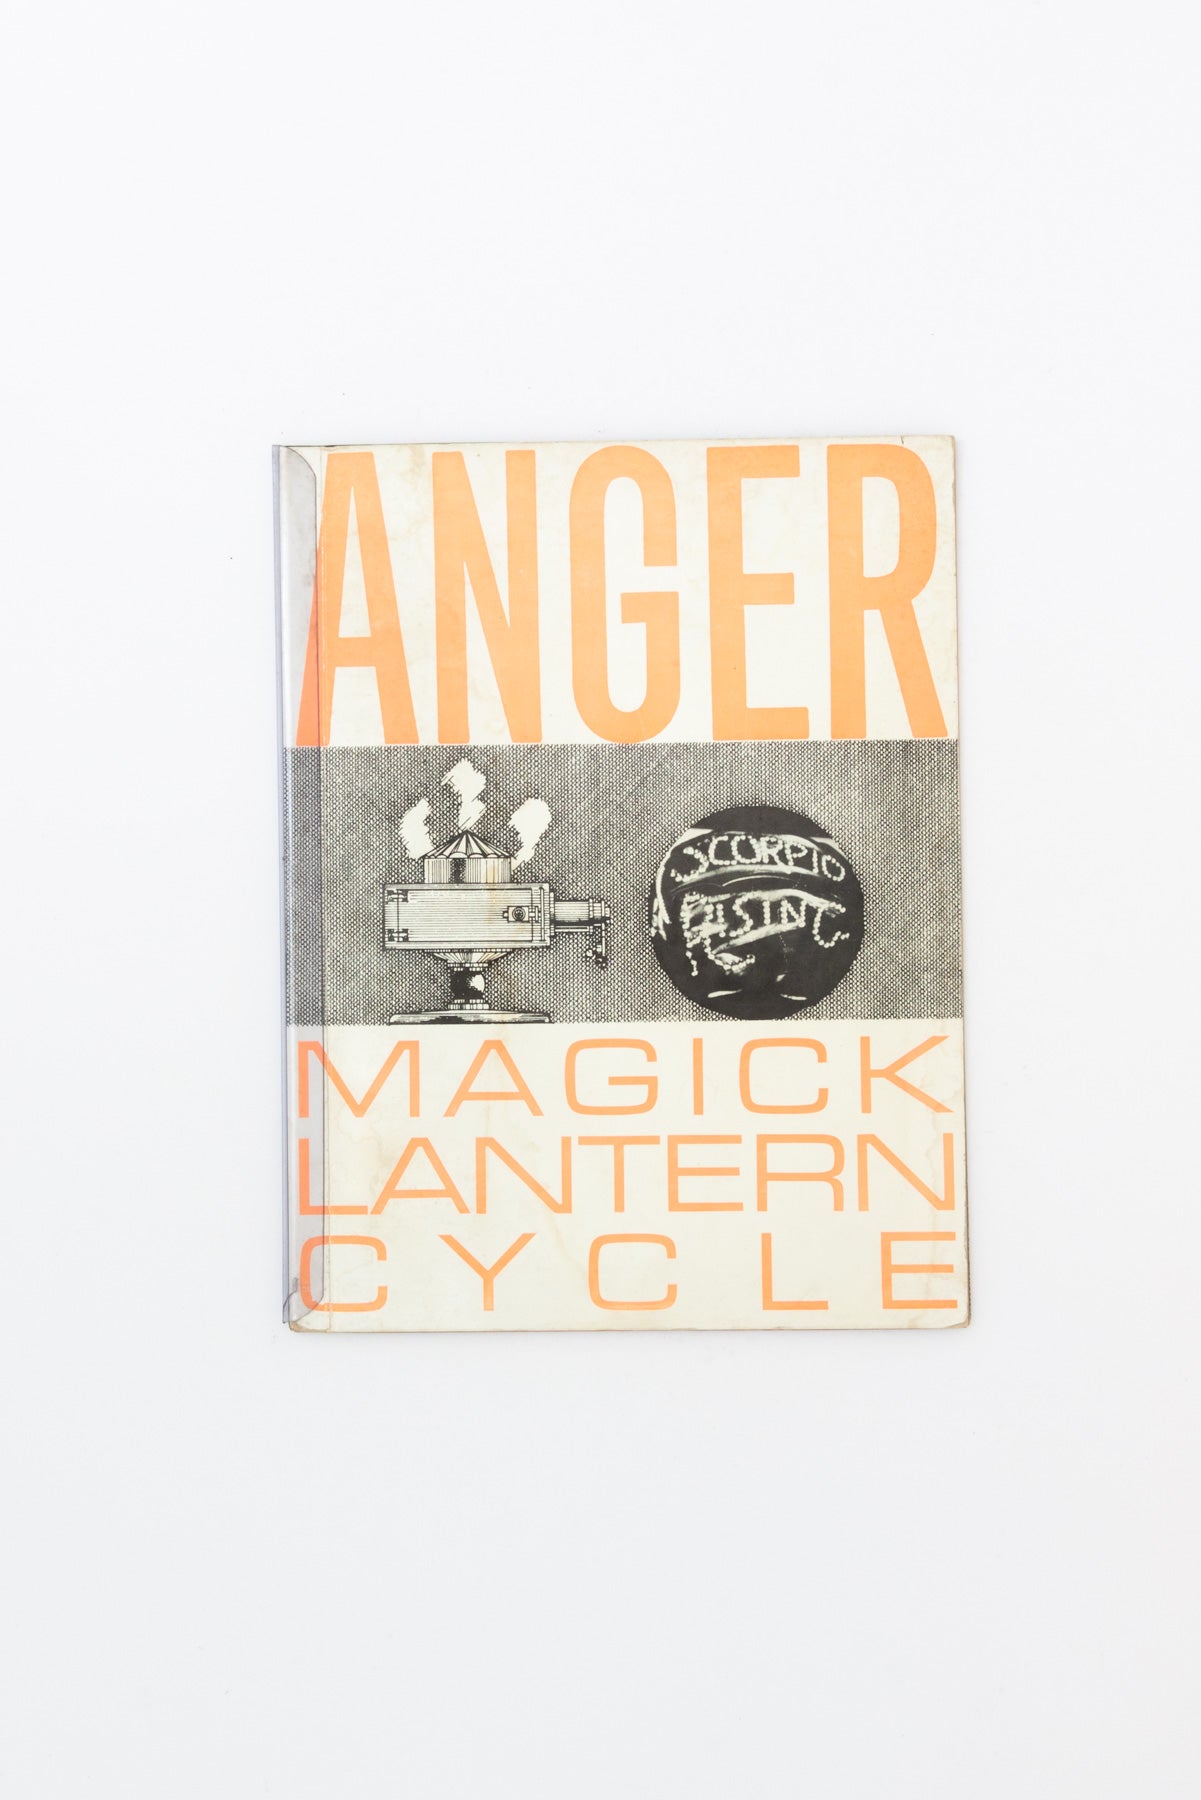 MAGICK LANTERN CYCLE. - Kenneth Anger & Jonas Mekas